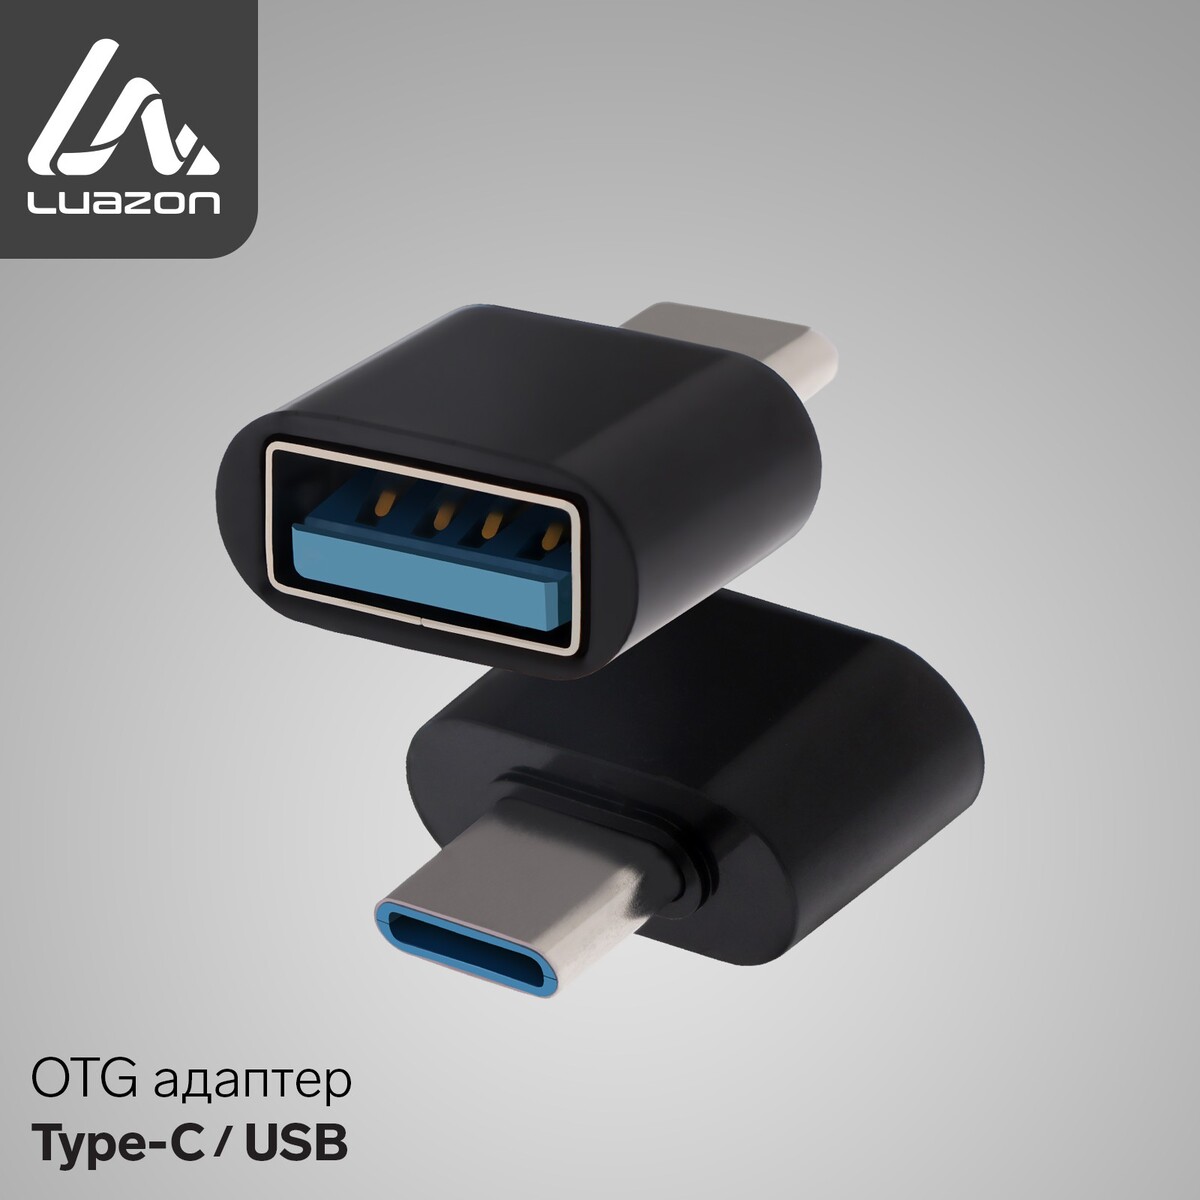 Otg адаптер luazon type-c - usb, цвет черный адаптер для автокресла anex type